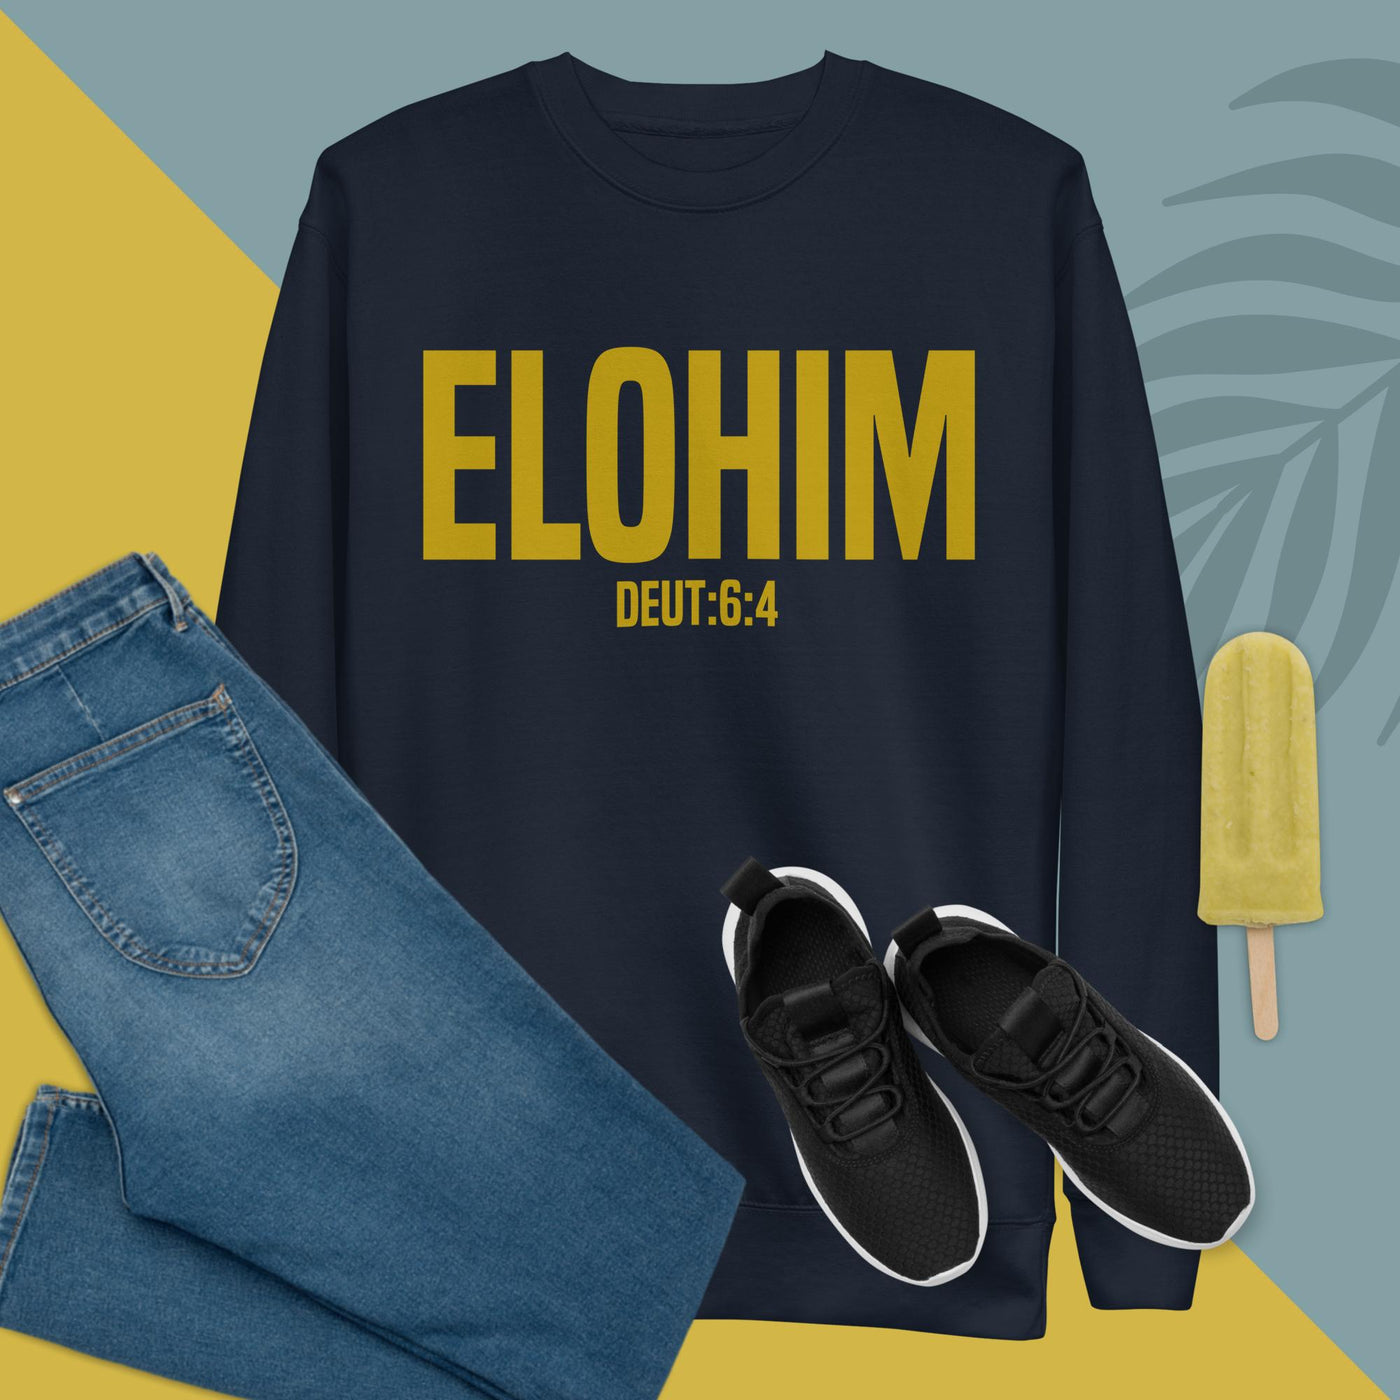 F&H Christian Elohim Mens Premium Sweatshirt